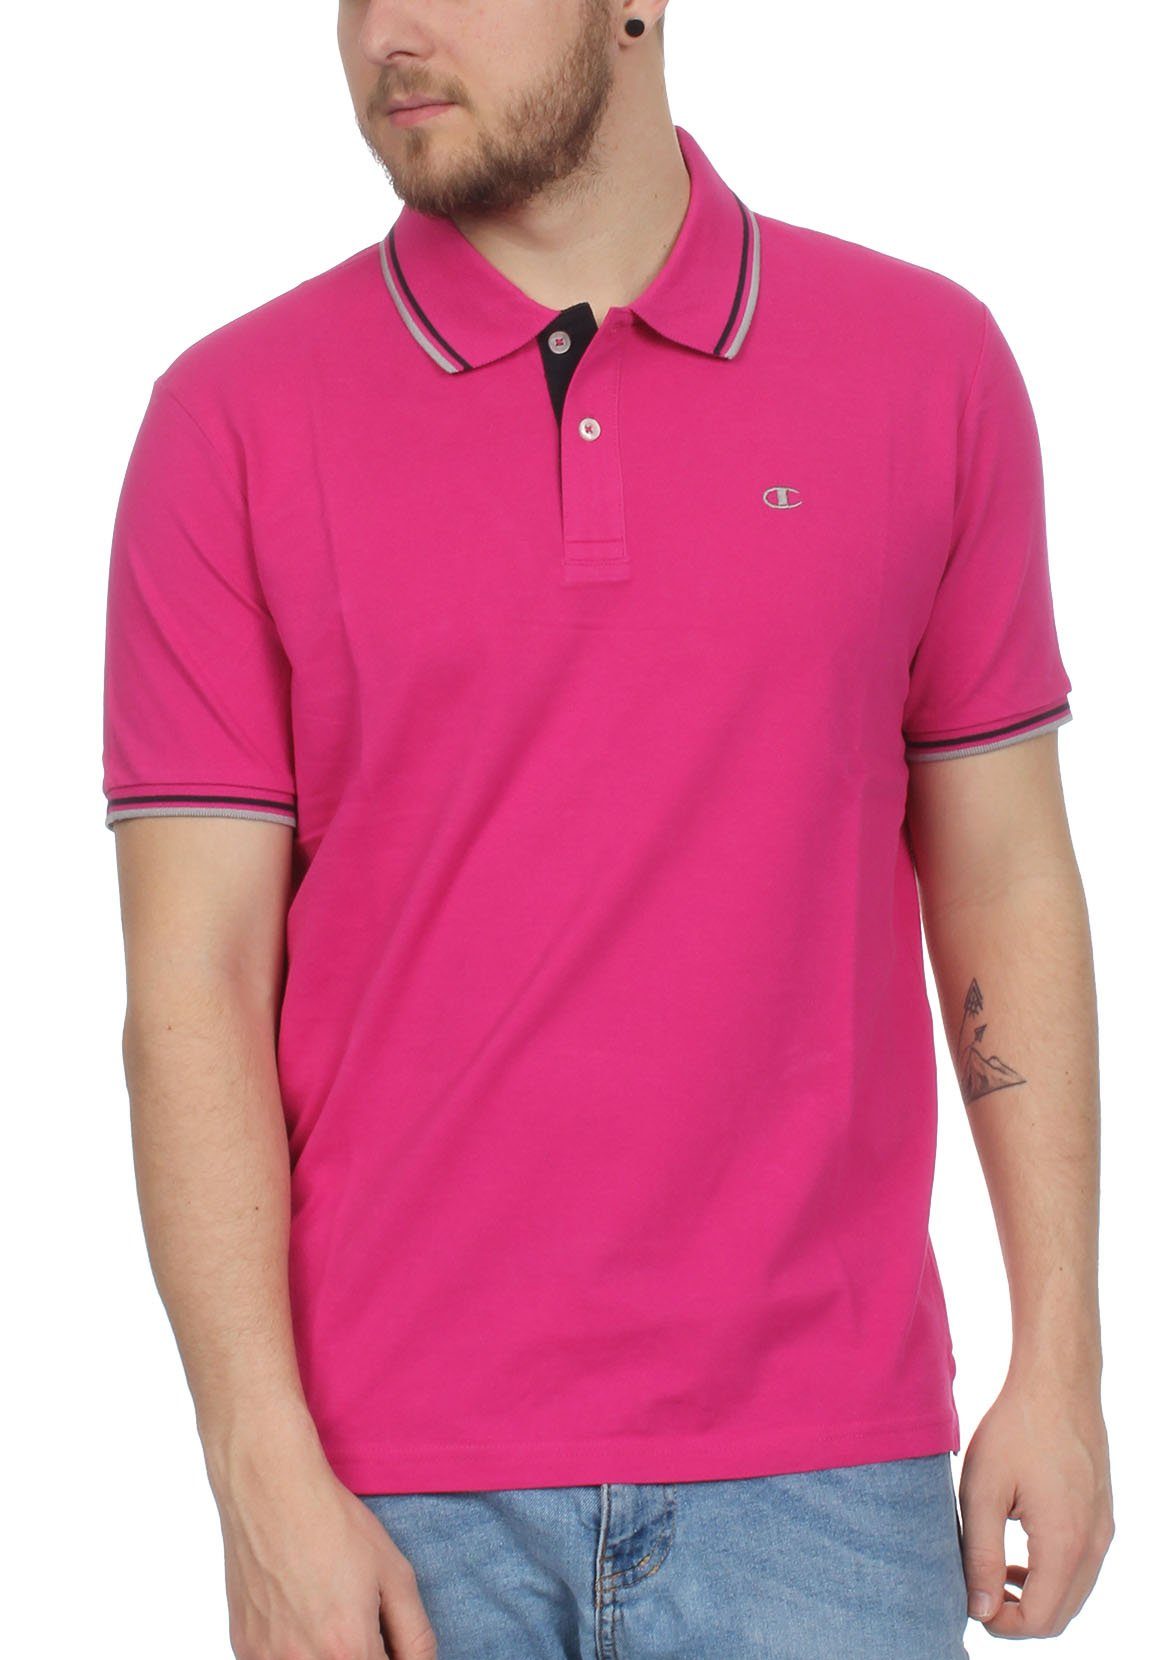 Champion Poloshirt Champion Herren 211847 S21 Authletic pink Poloshirt